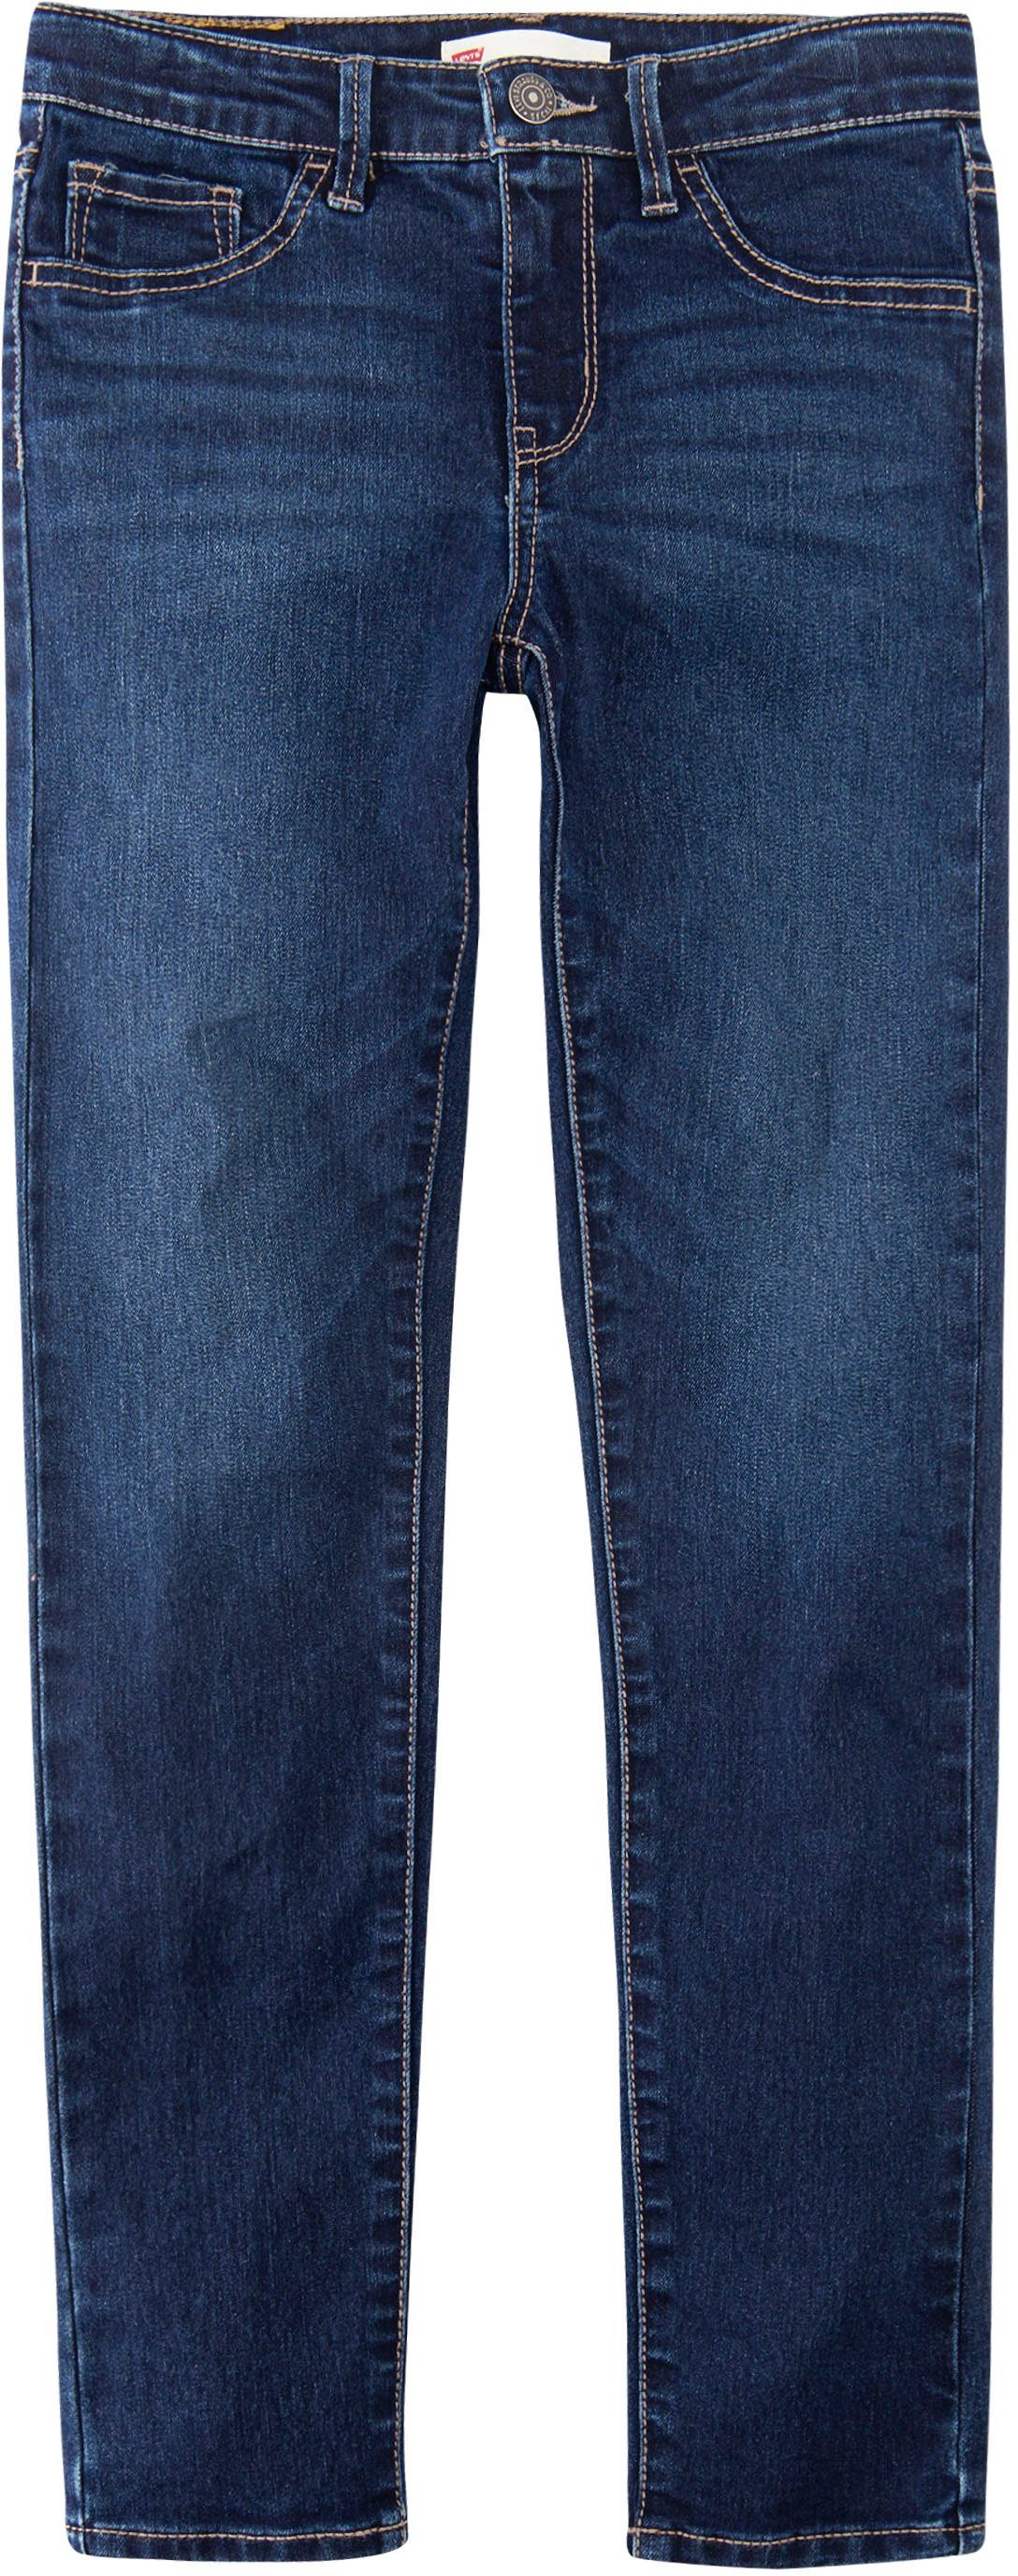 Levi's® Kids Stretch-Jeans 710™ FIT GIRLS dark SUPER used SKINNY JEANS blue for denim